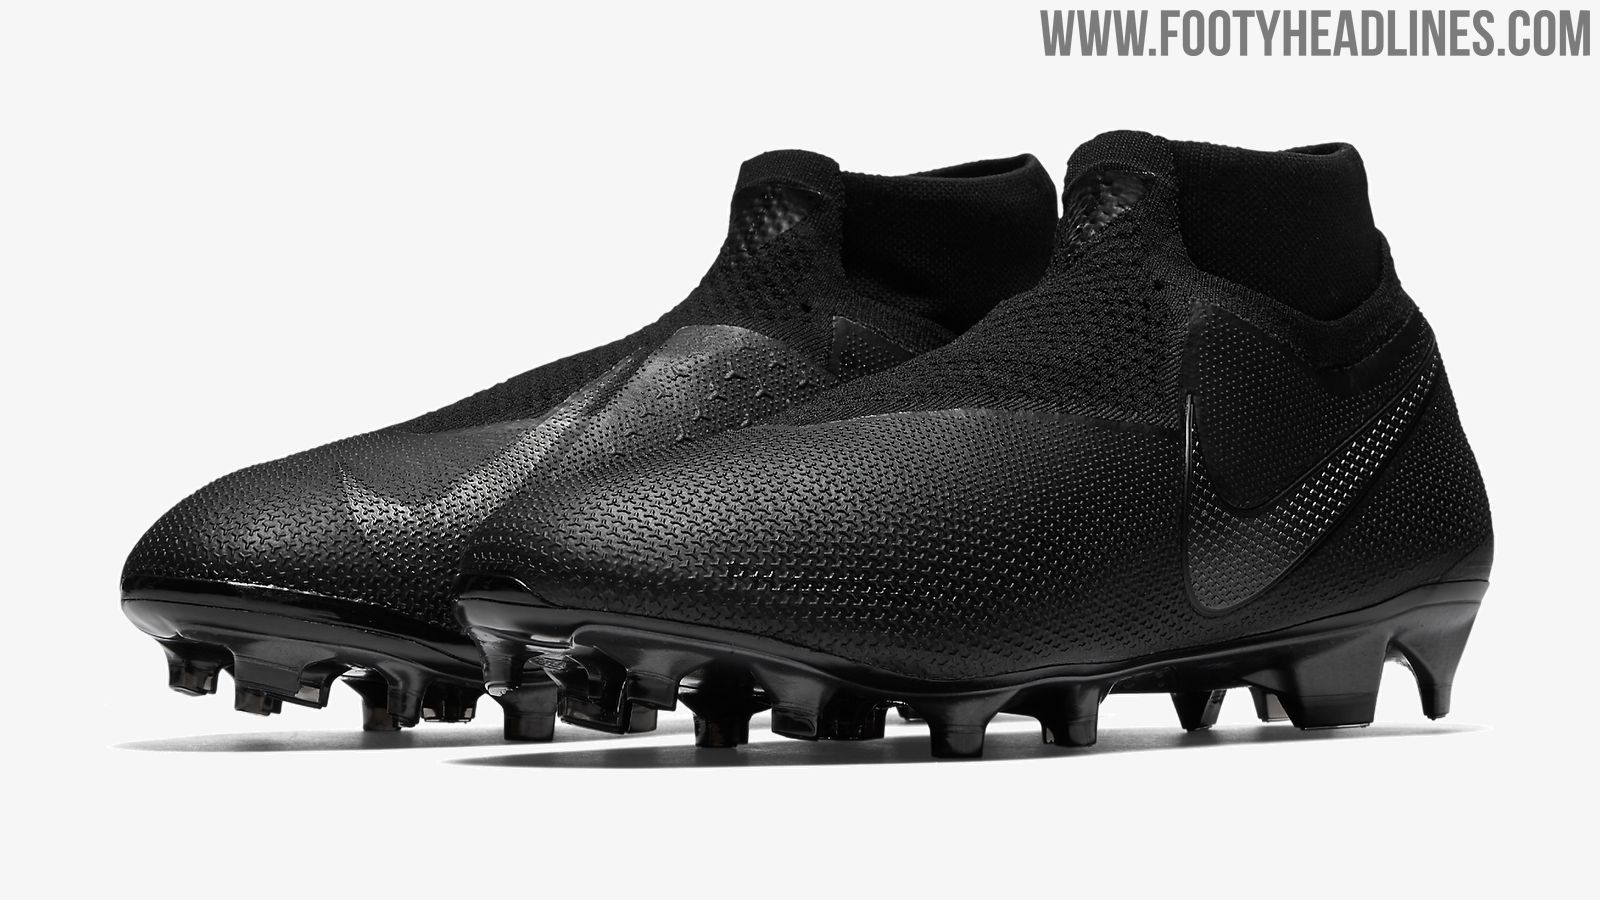 dempen Dicteren brandstof Blackout: Nike 'Stealth Ops' Pack Boots Released - Footy Headlines